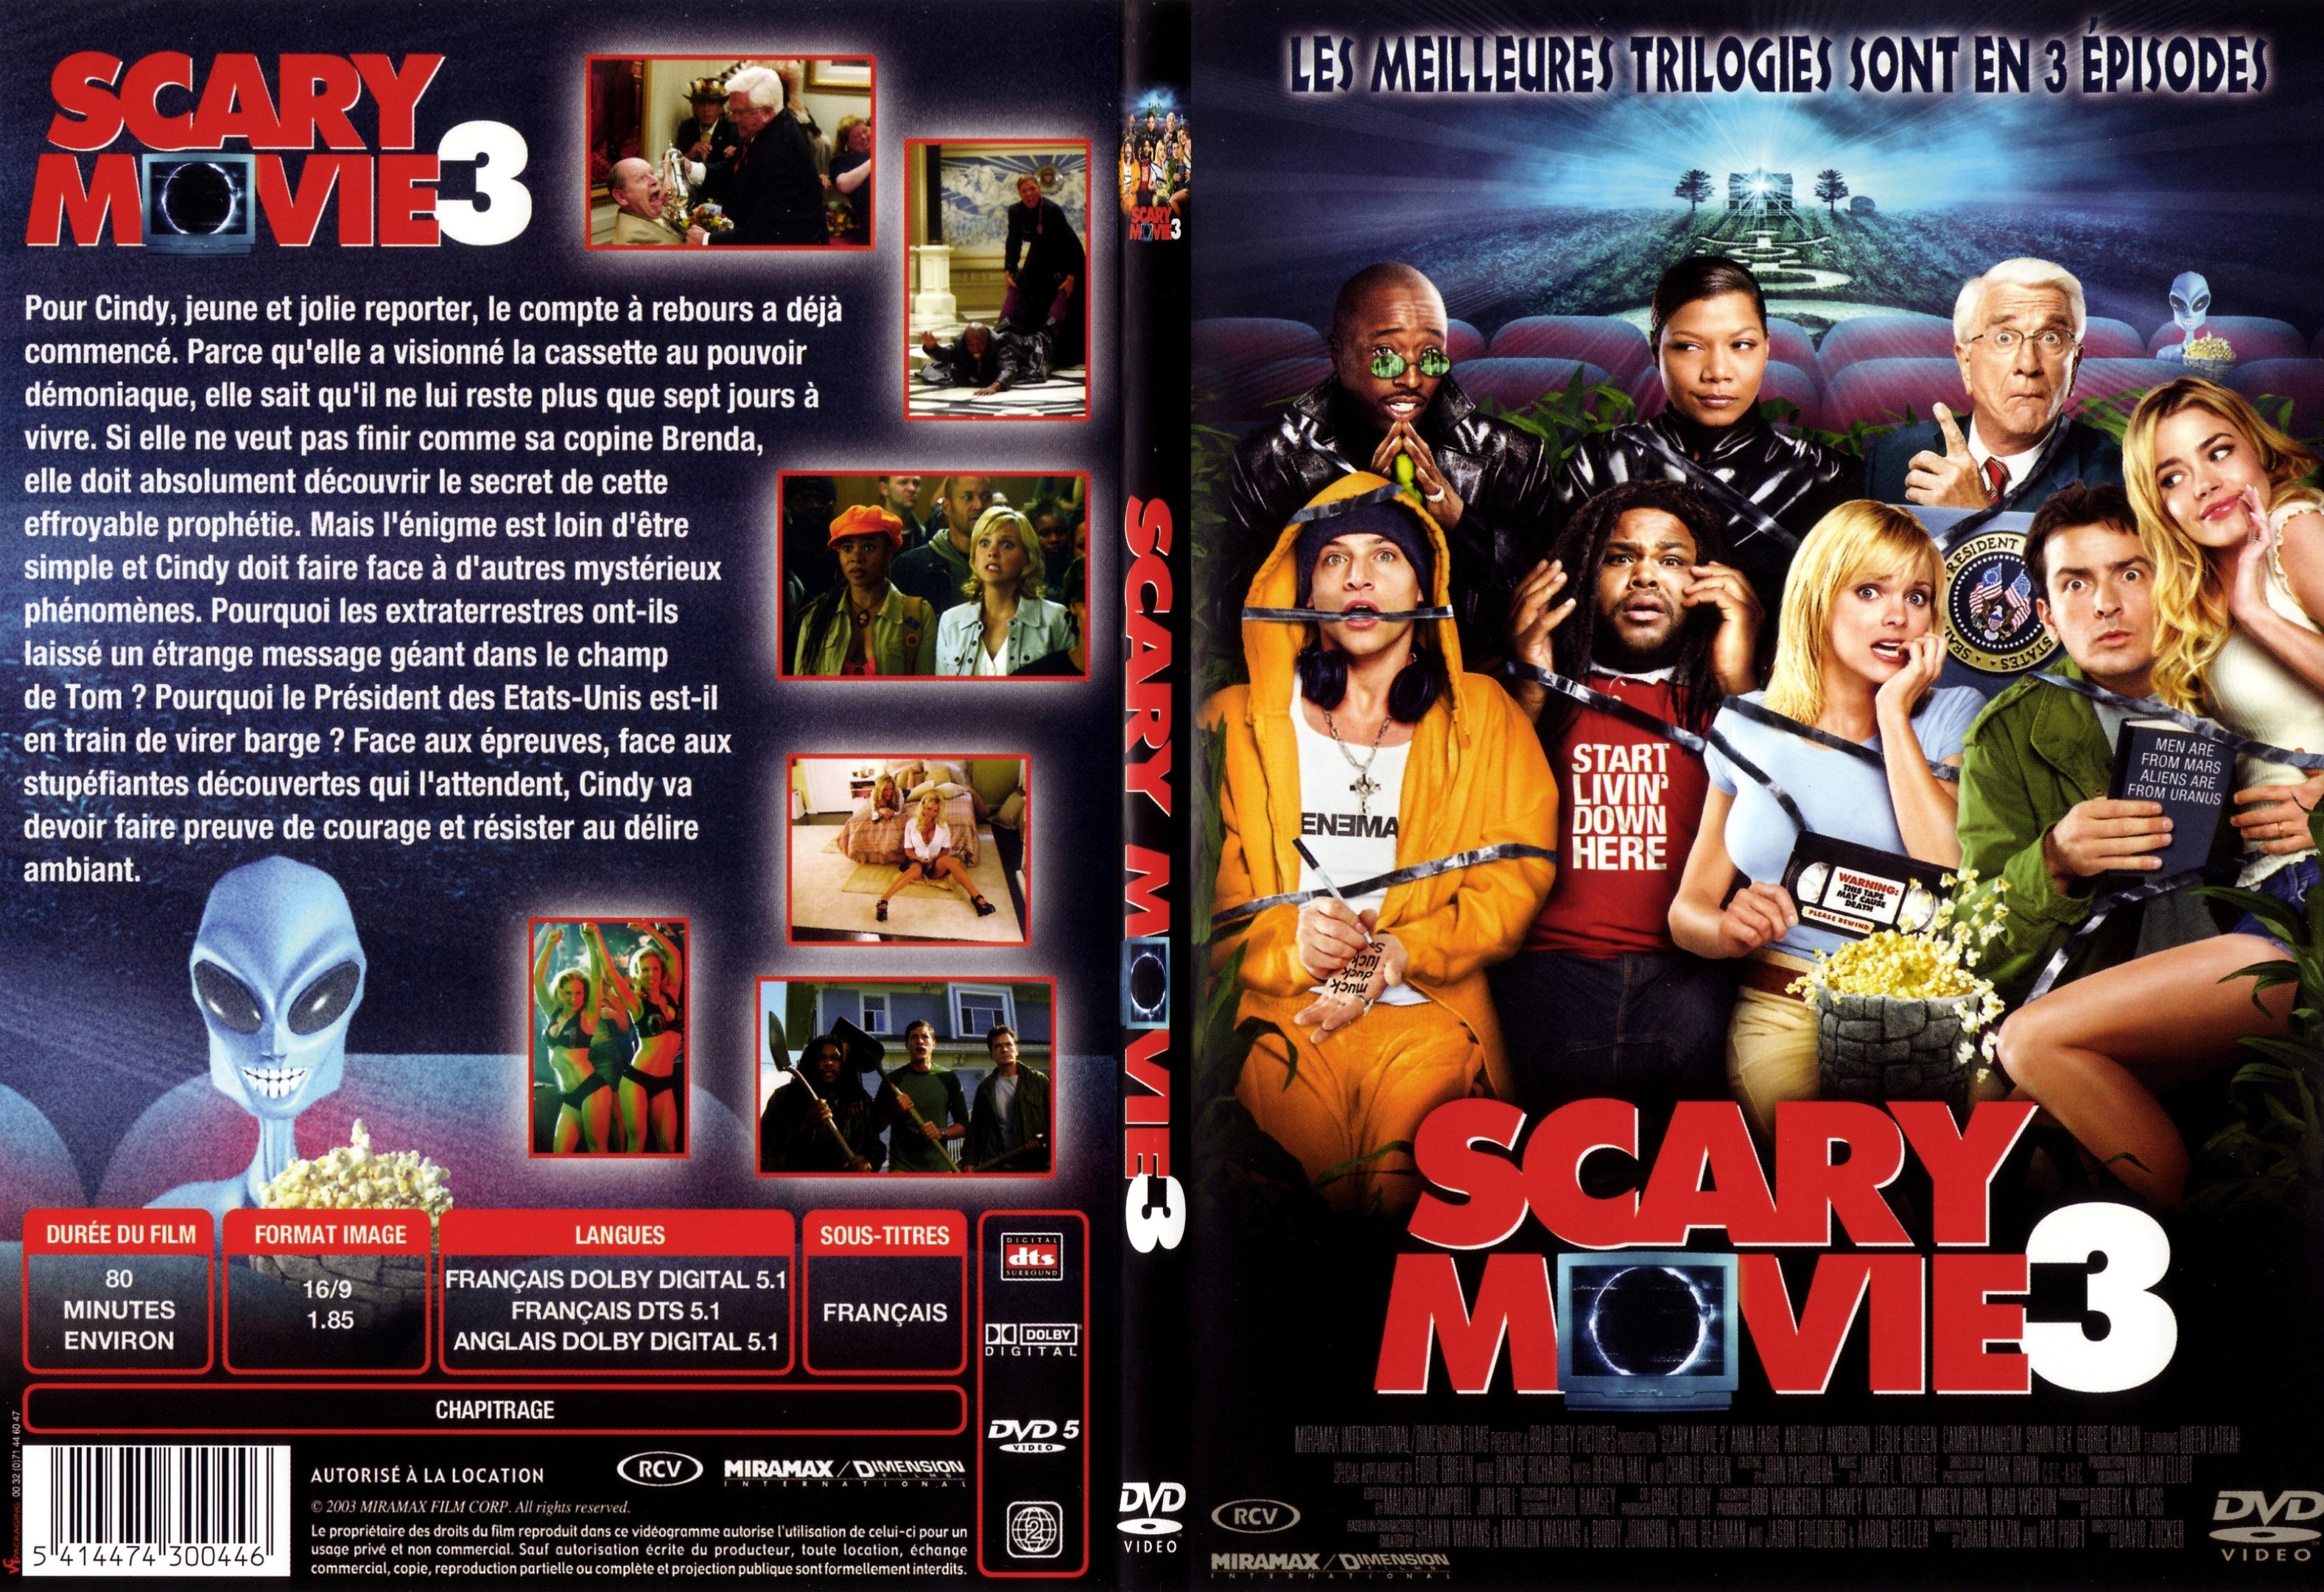 Jaquette DVD Scary movie 3 - SLIM v2